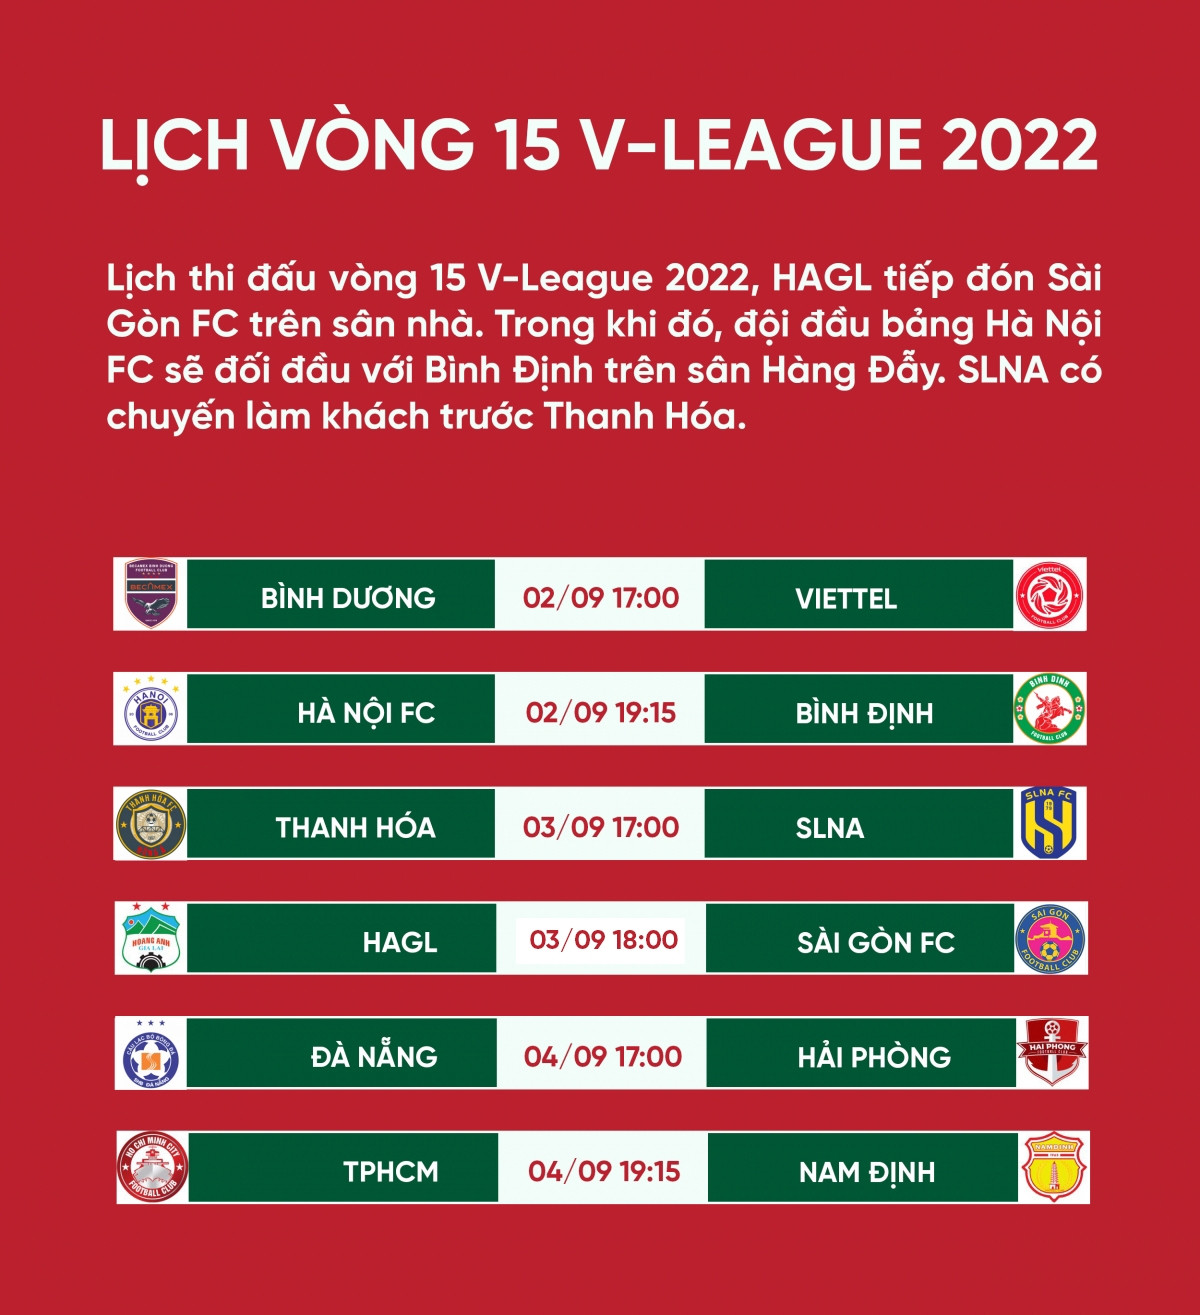 lich thi dau v-league 2022 hom nay 2 9 ha noi fc so tai binh Dinh hinh anh 1